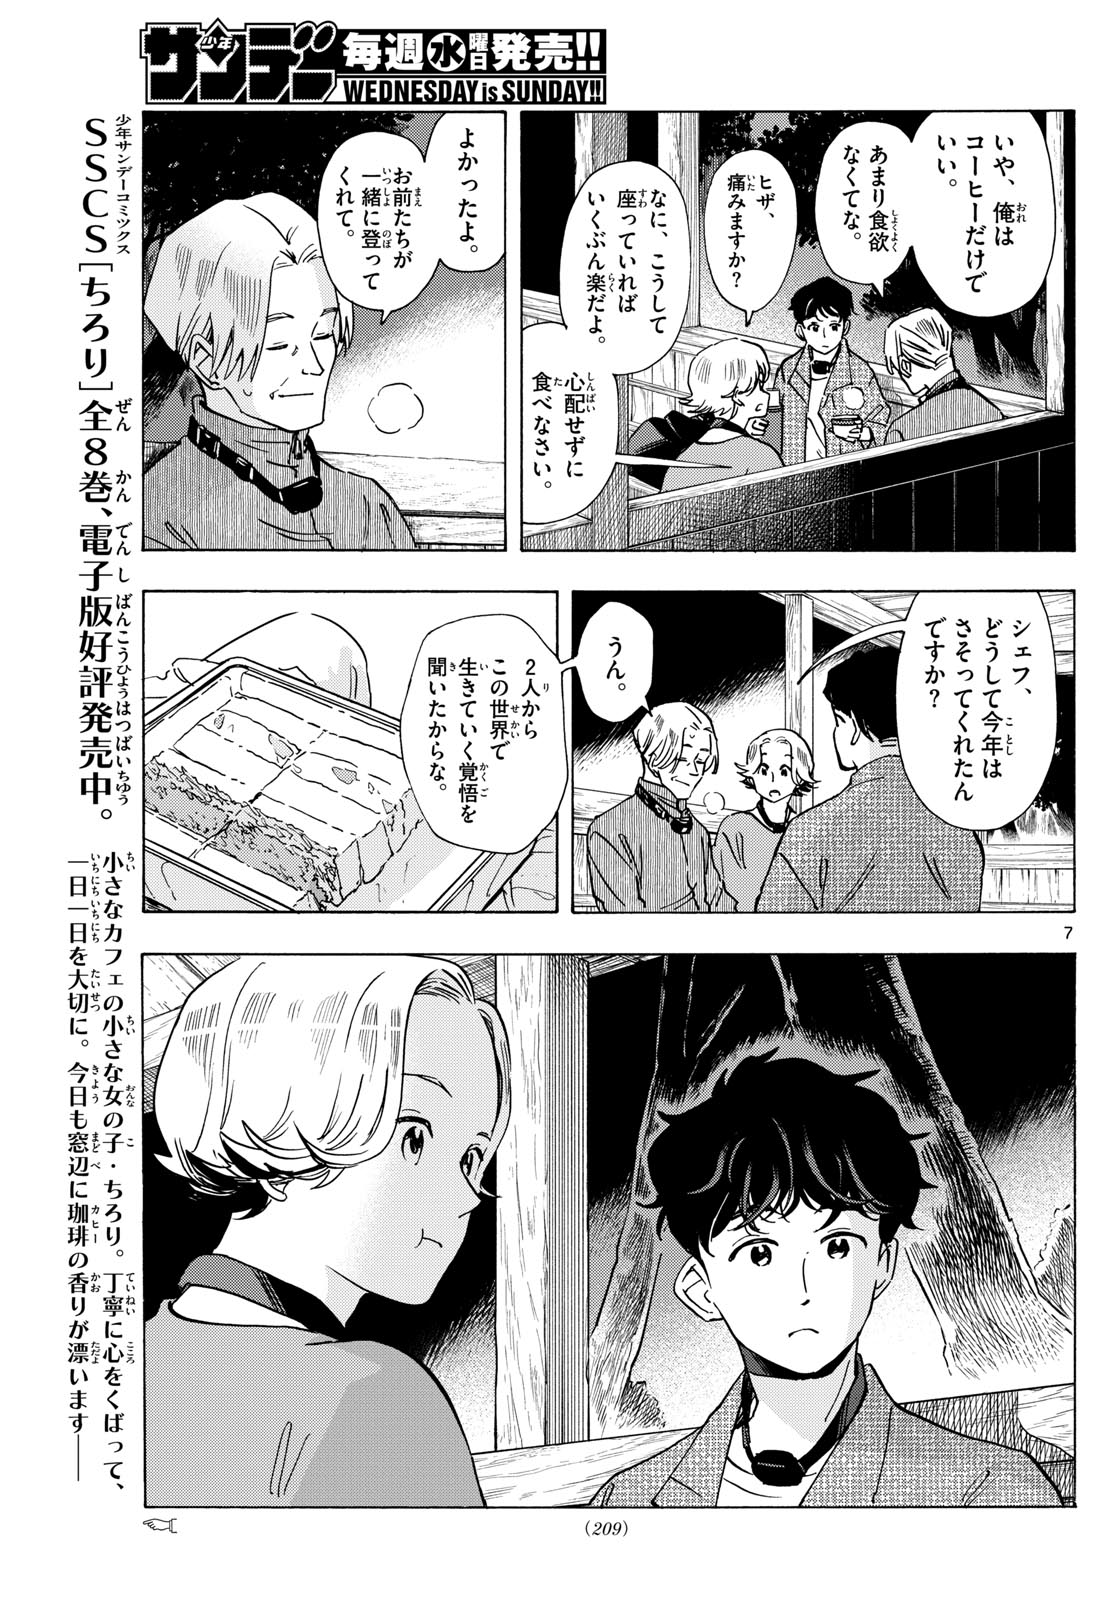 Maiko-san Chi no Makanai-san - Chapter 295 - Page 7